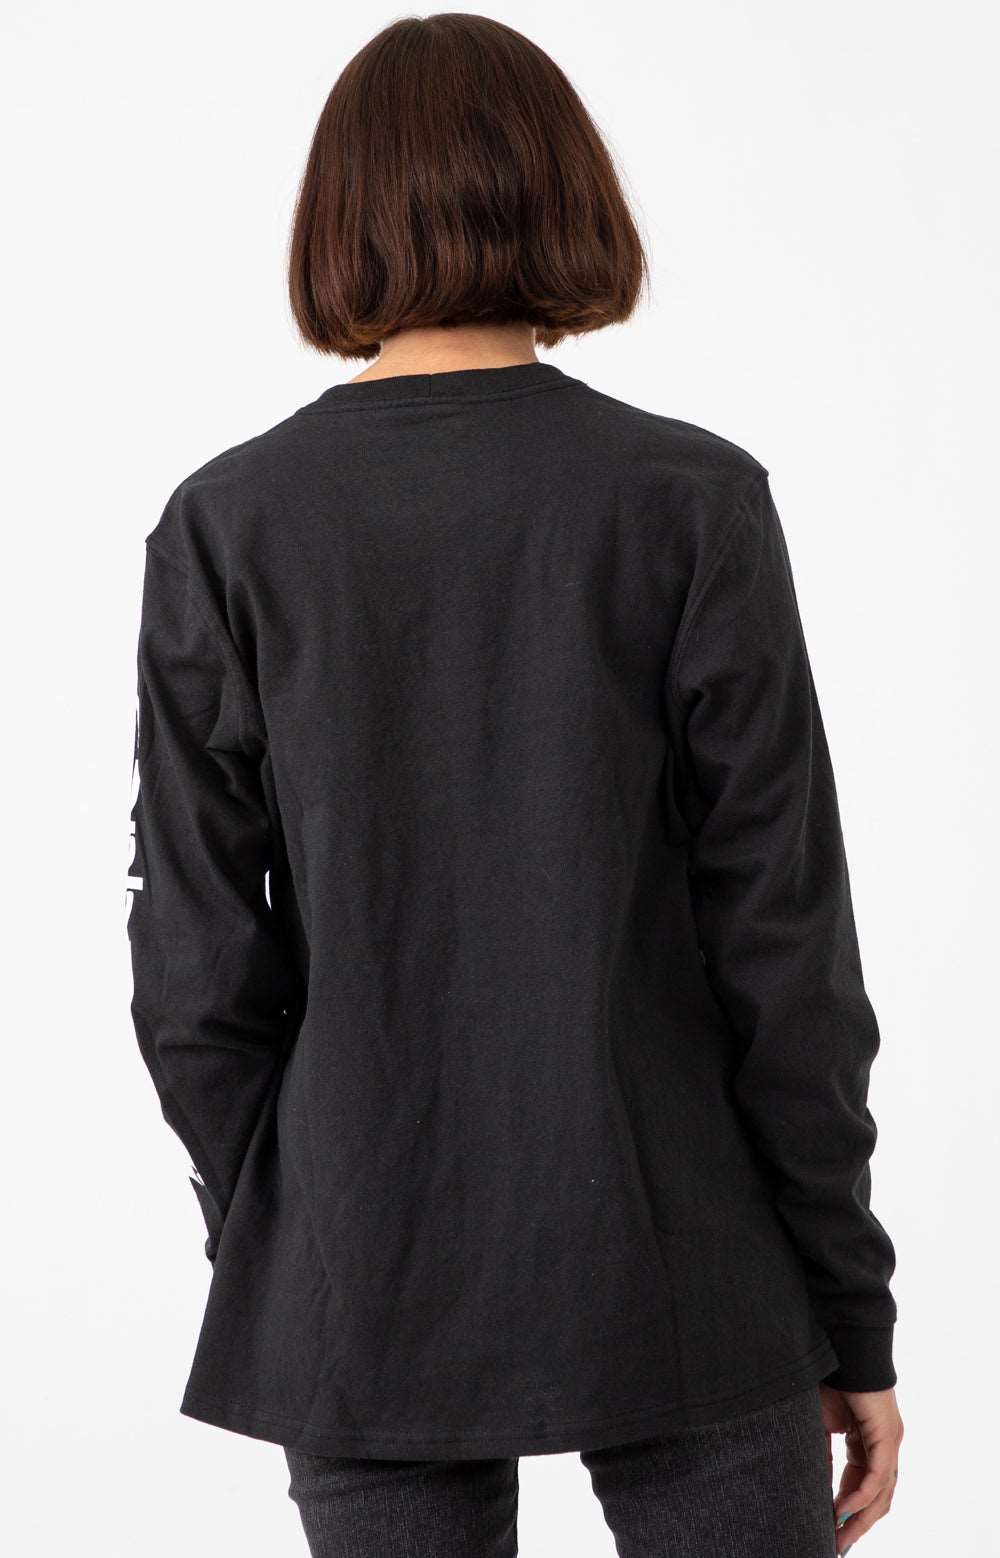 (103401) Workwear Sleeve Logo L/S Shirt - Black/White